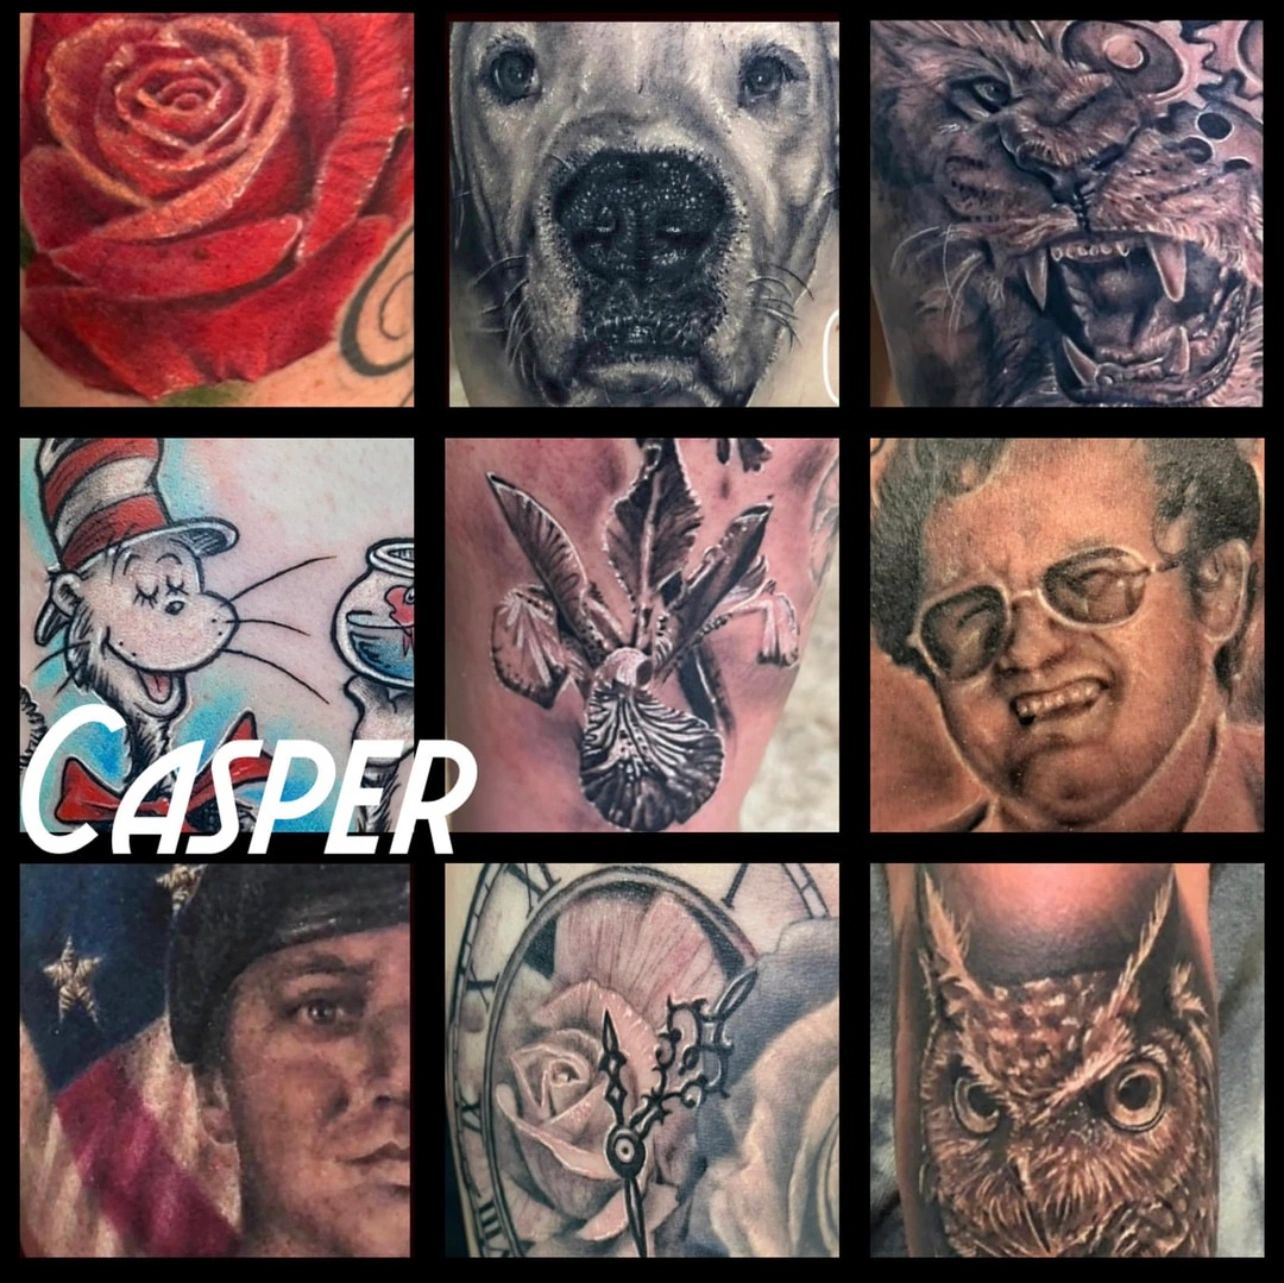 Casper's work